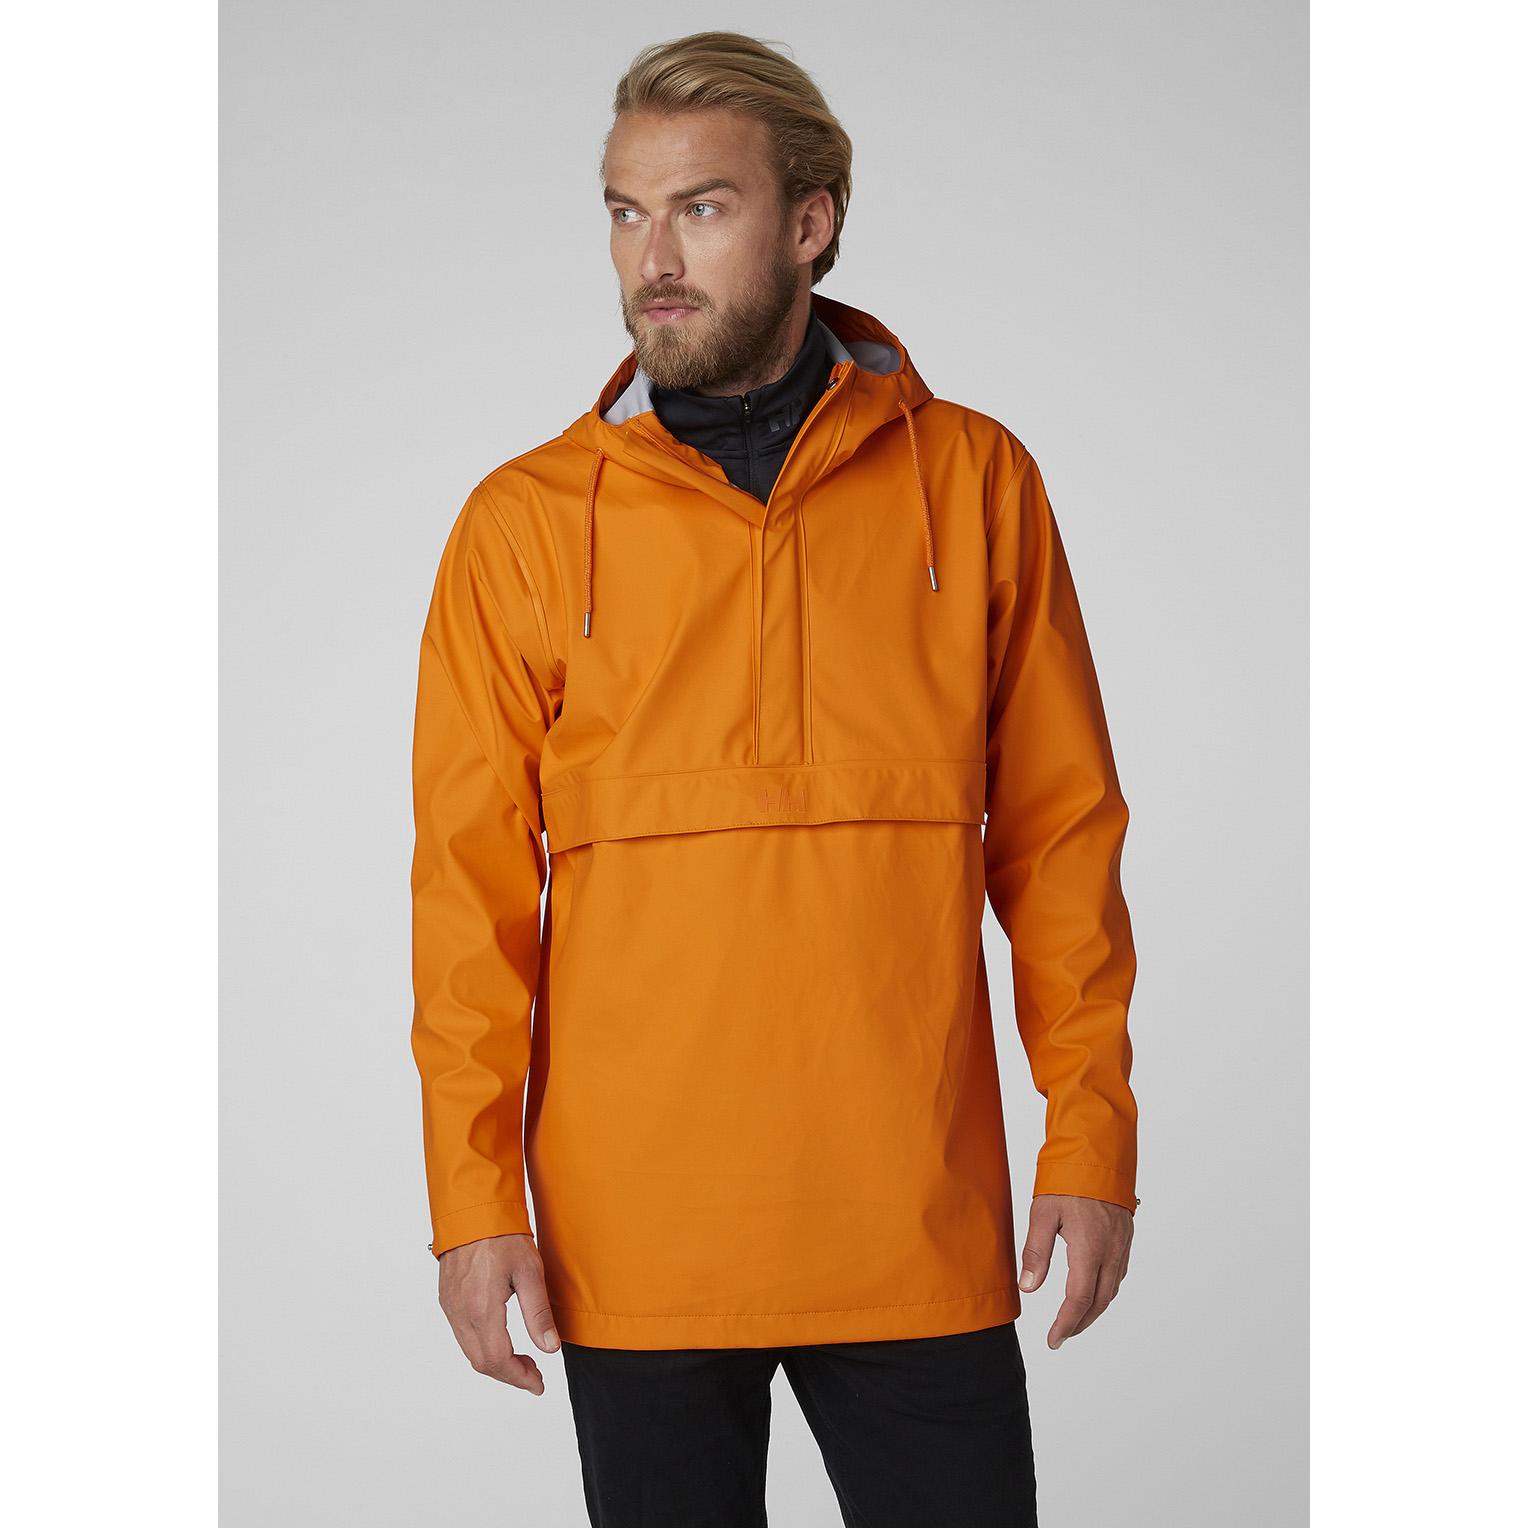 Helly Hansen Moss Anorak Rain Jacket Orange for Men - Lyst